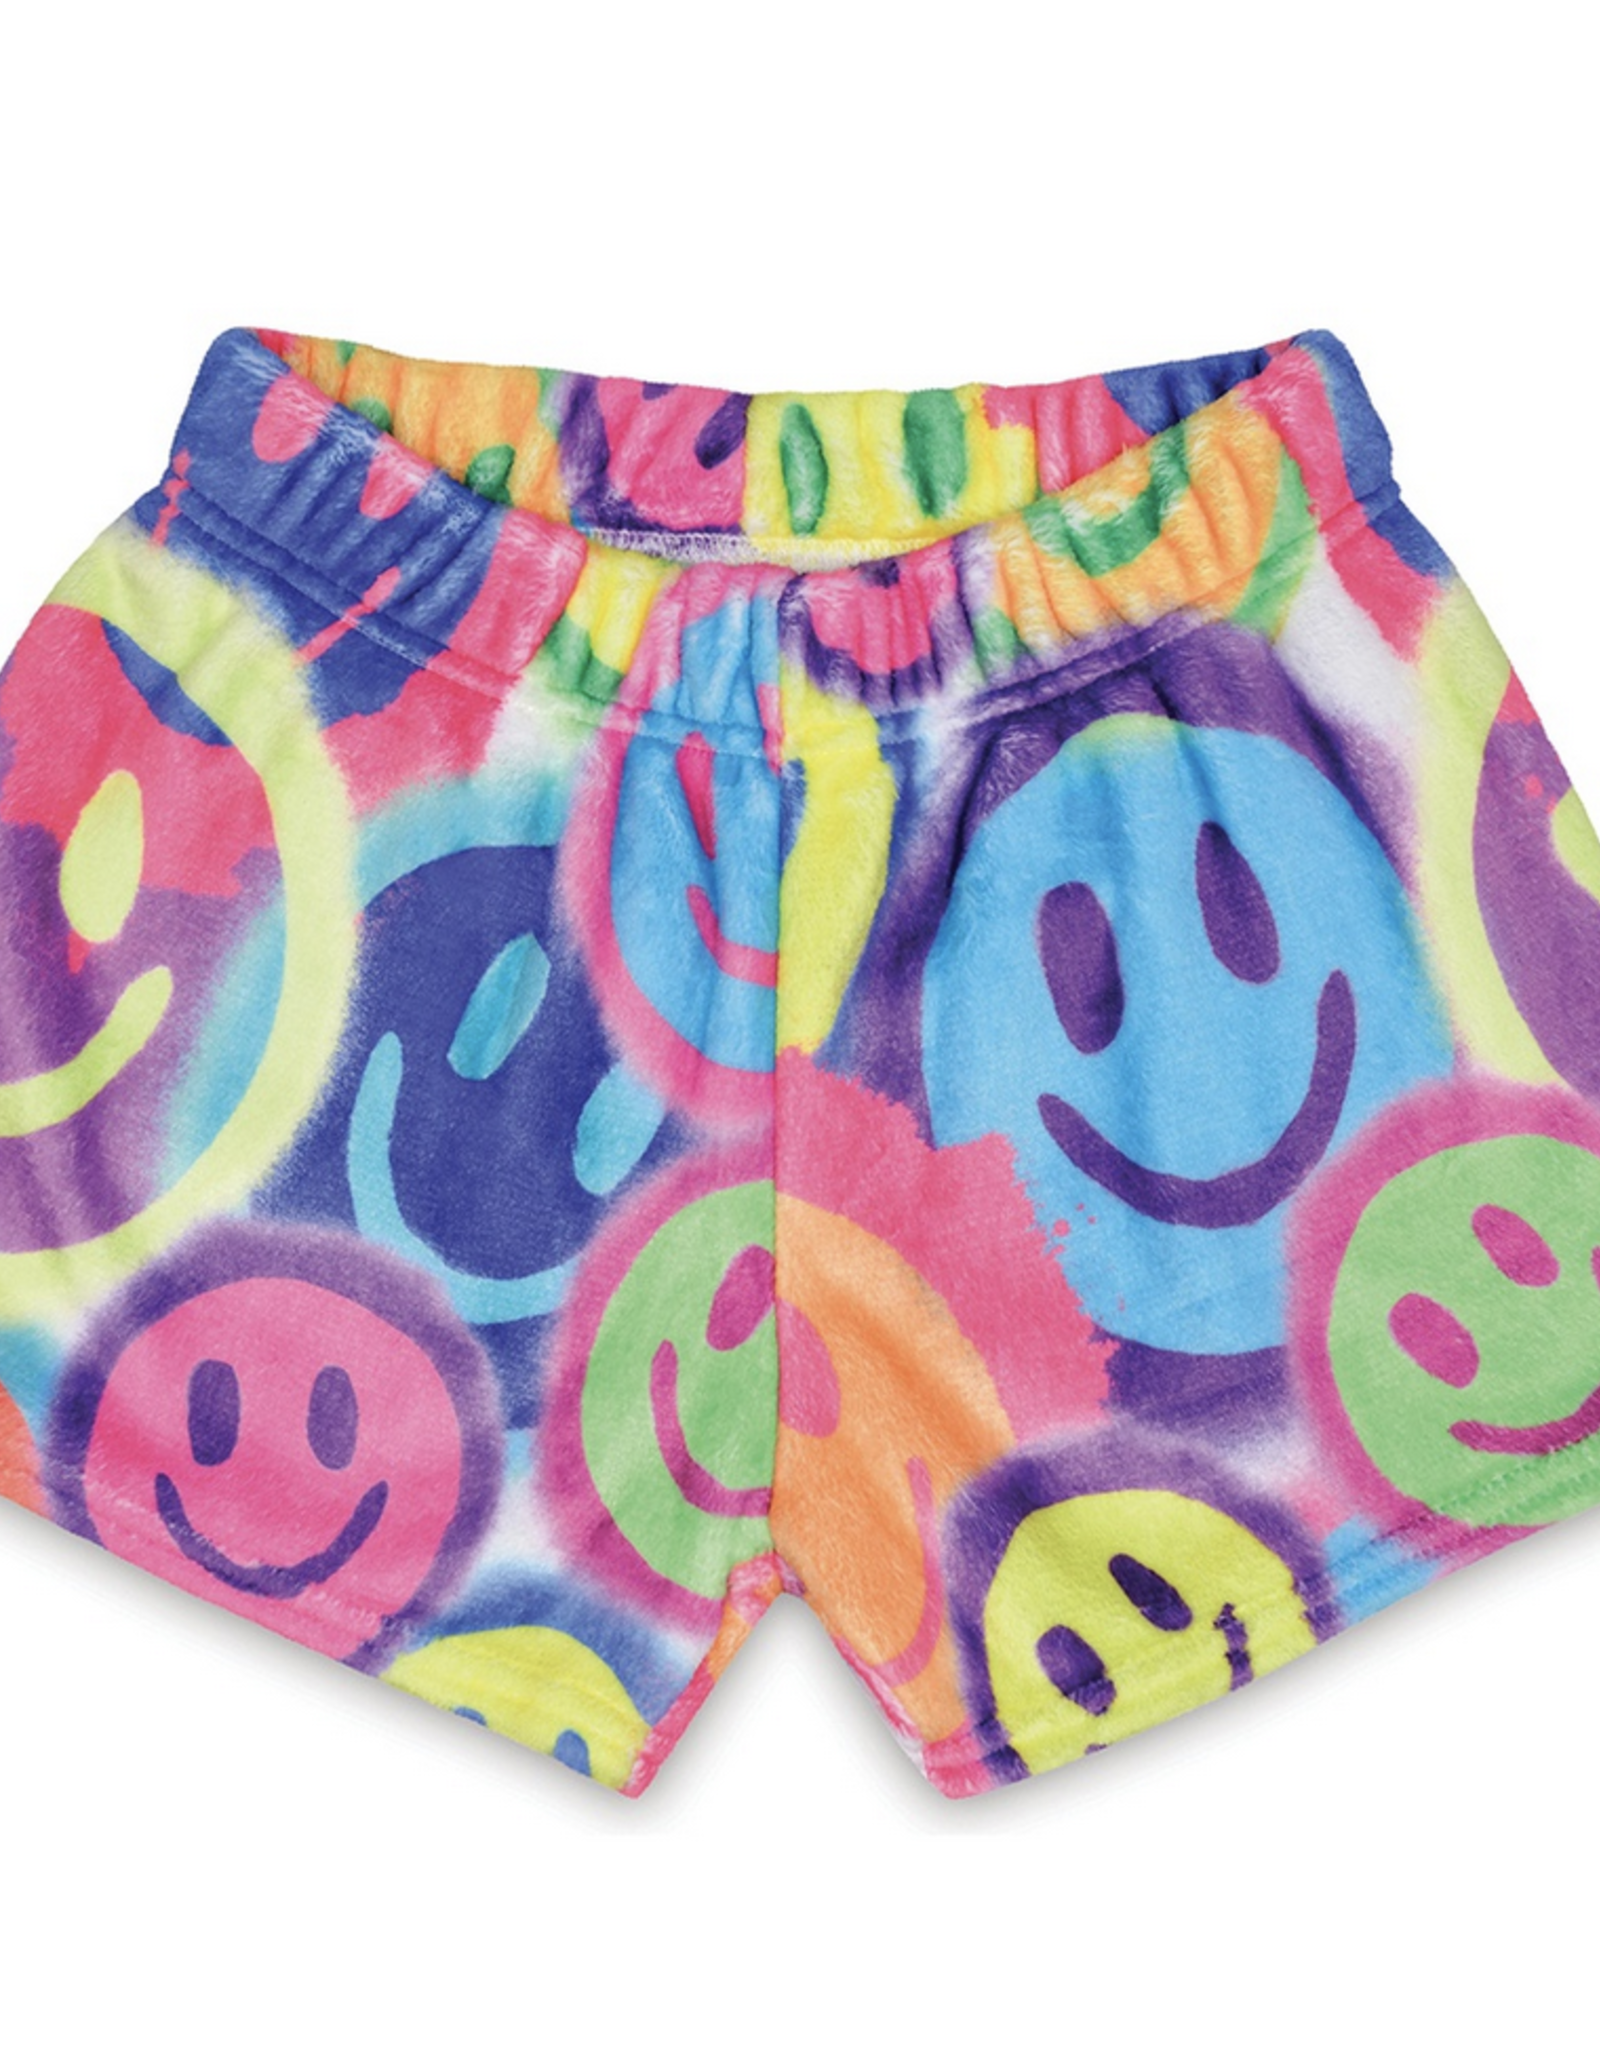 iScream plush shorts- spray paint smiles